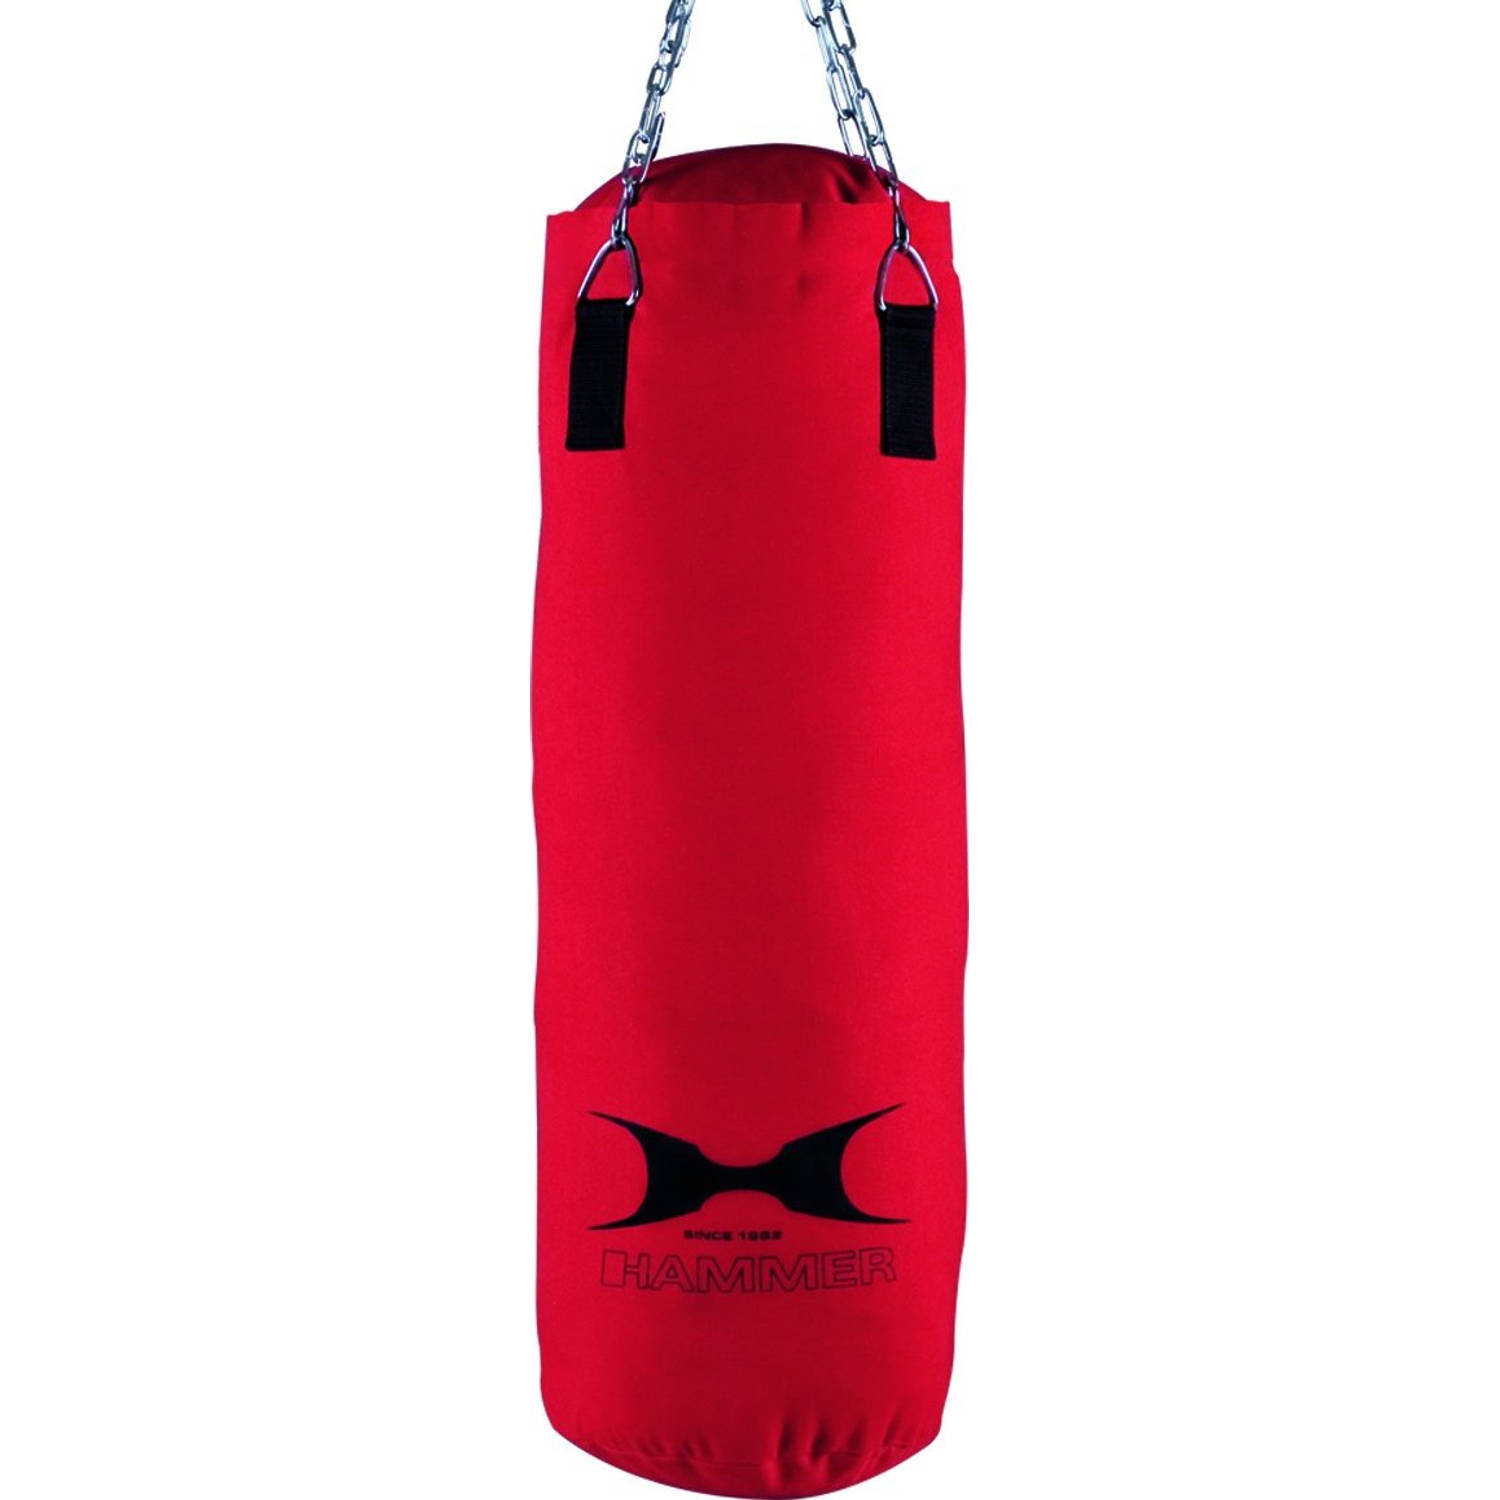 Hammer Boxing Bokszak Fit - Stootzak - Boxzak - 60 cm - Rood - inclusief vierpunts-ketting met swivel